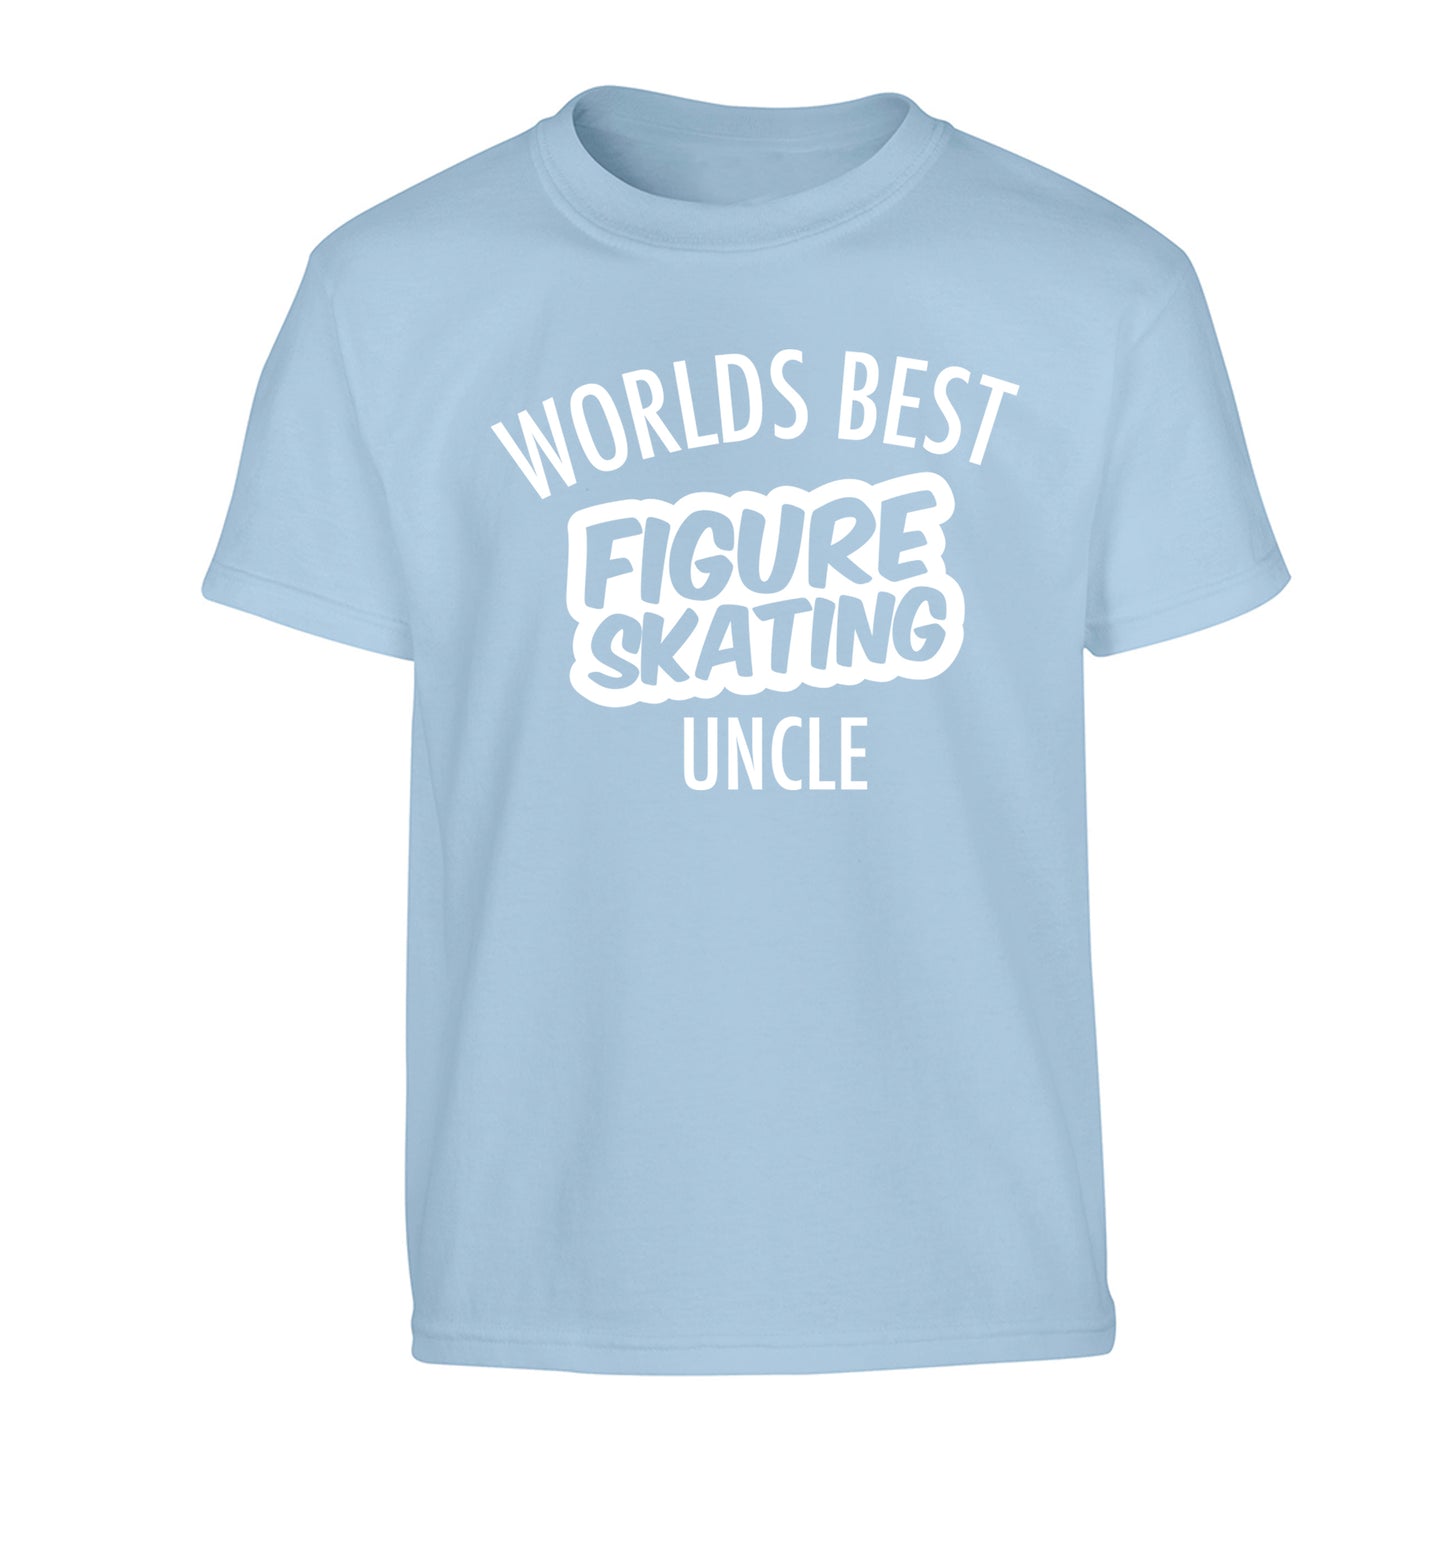 Worlds best figure skating uncle Children's light blue Tshirt 12-14 Years